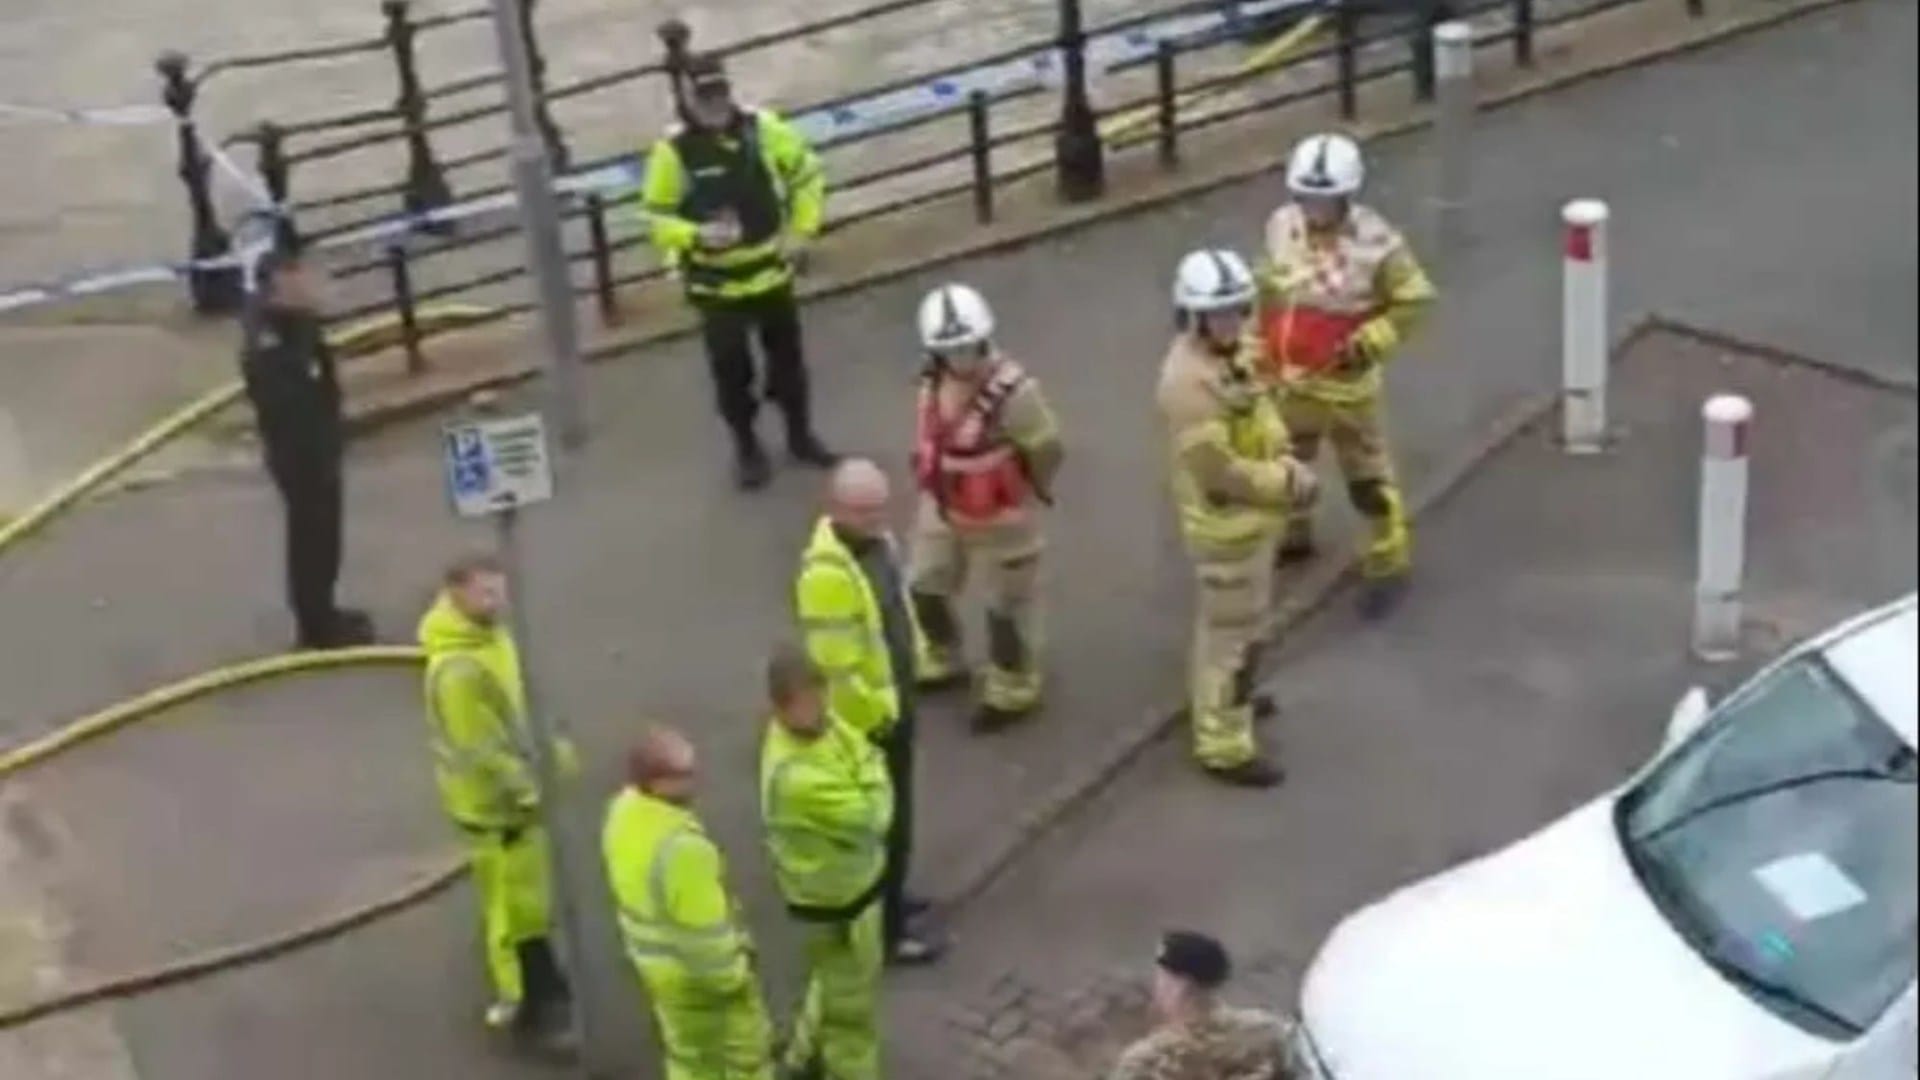 Urgent lockdown in Darwen town centre after grenade found near Wetherspoons sparking huge emergency response